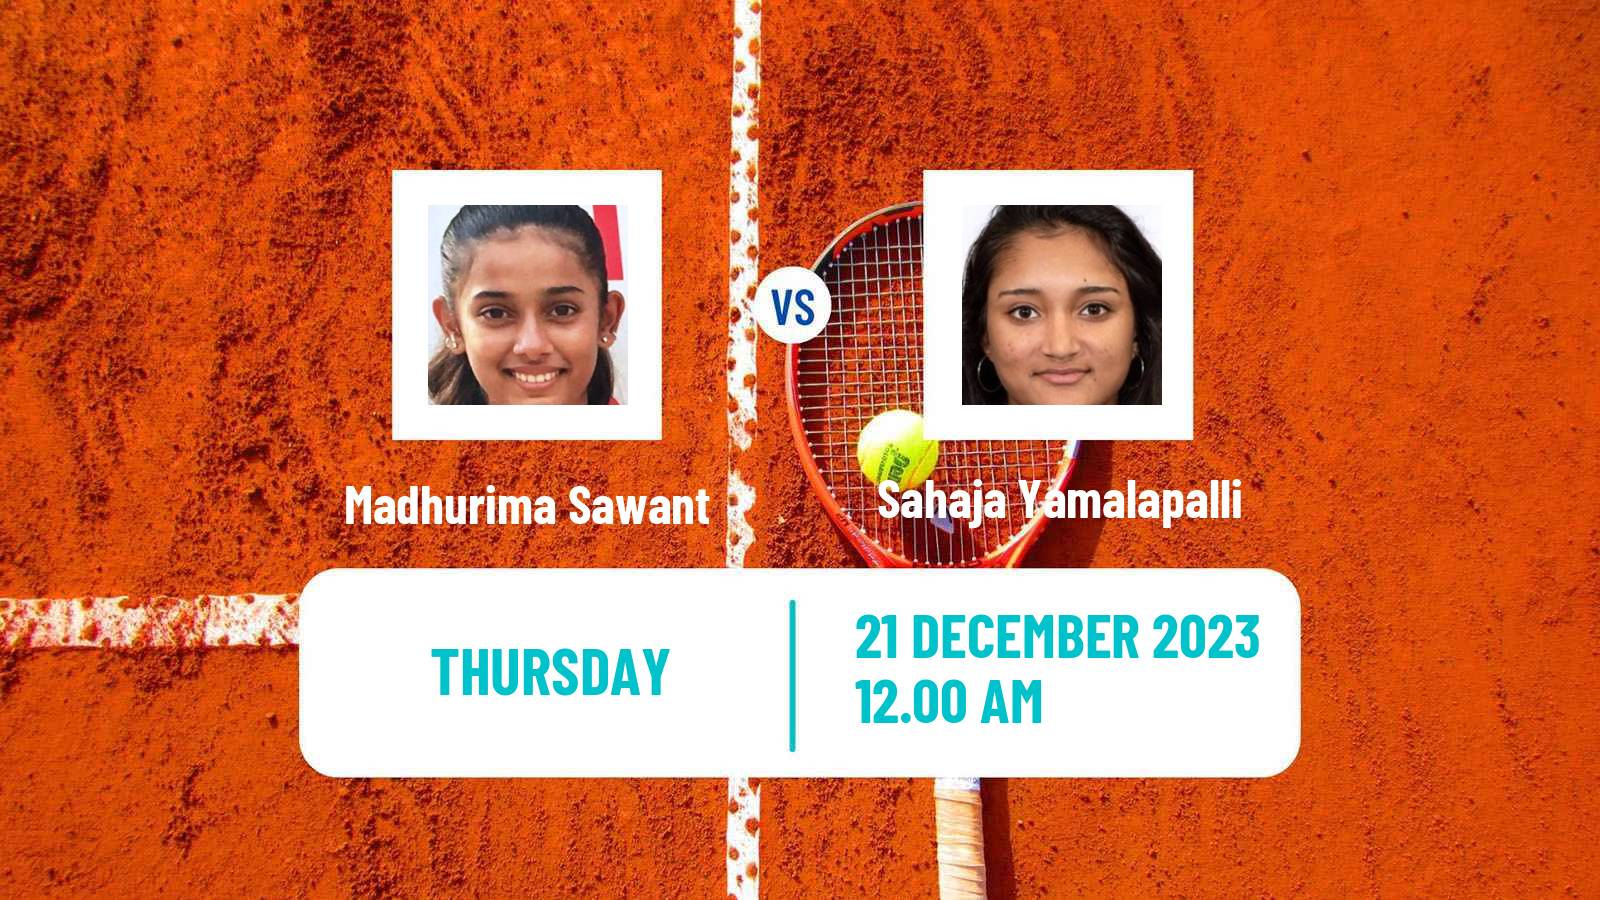 Tennis ITF W25 Solapur Women Madhurima Sawant - Sahaja Yamalapalli